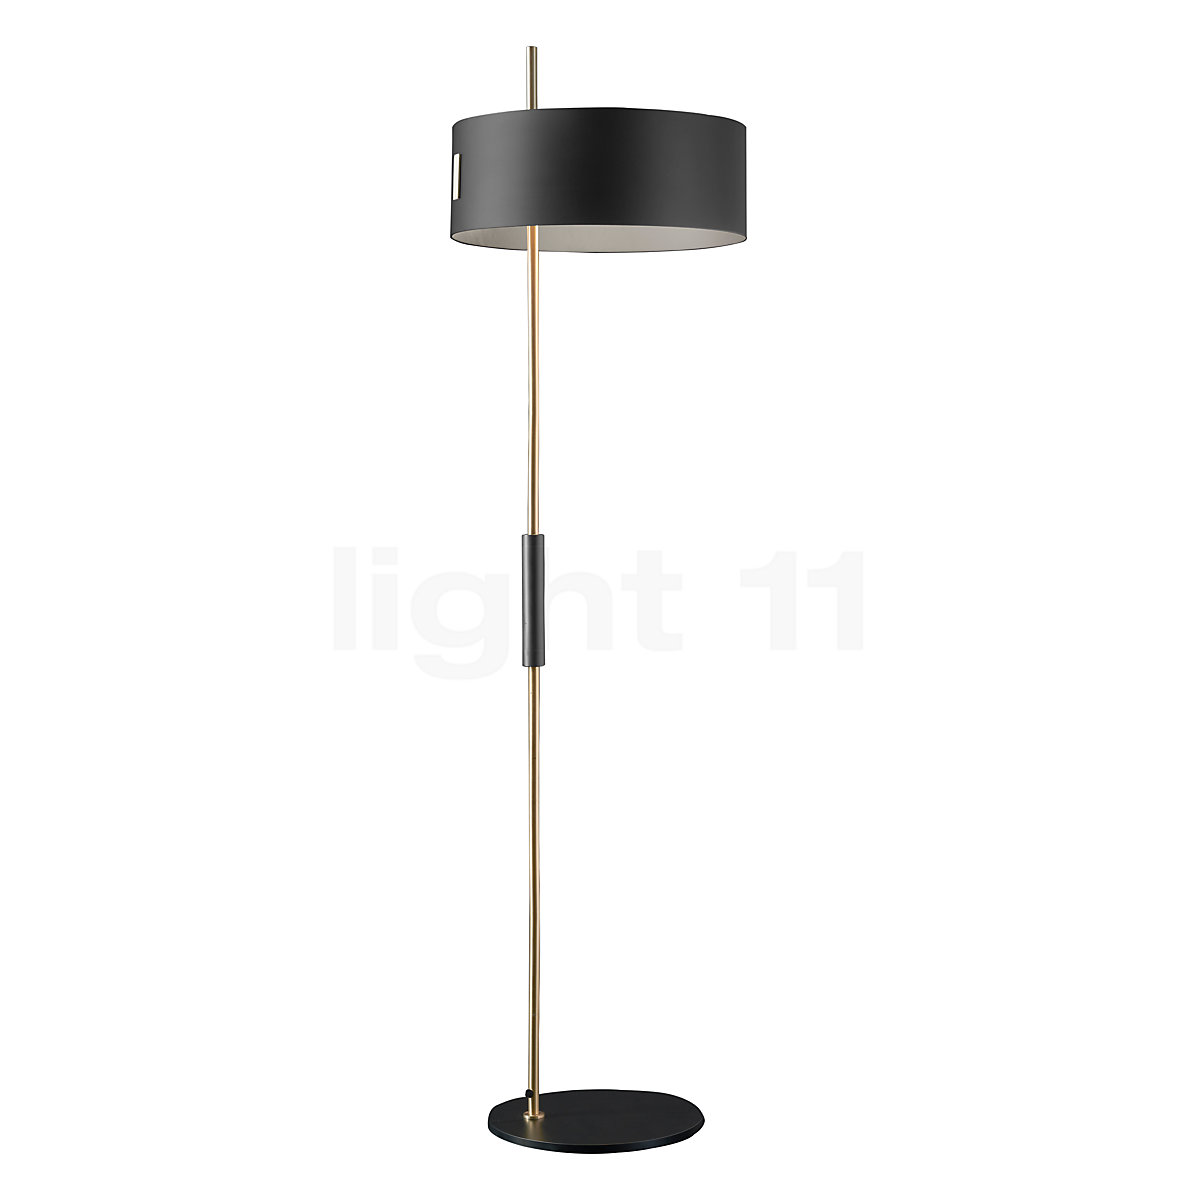 Oluce 1953 Floor Lamp At Light11 Eu, Gold Floor Lamp With Black Shade